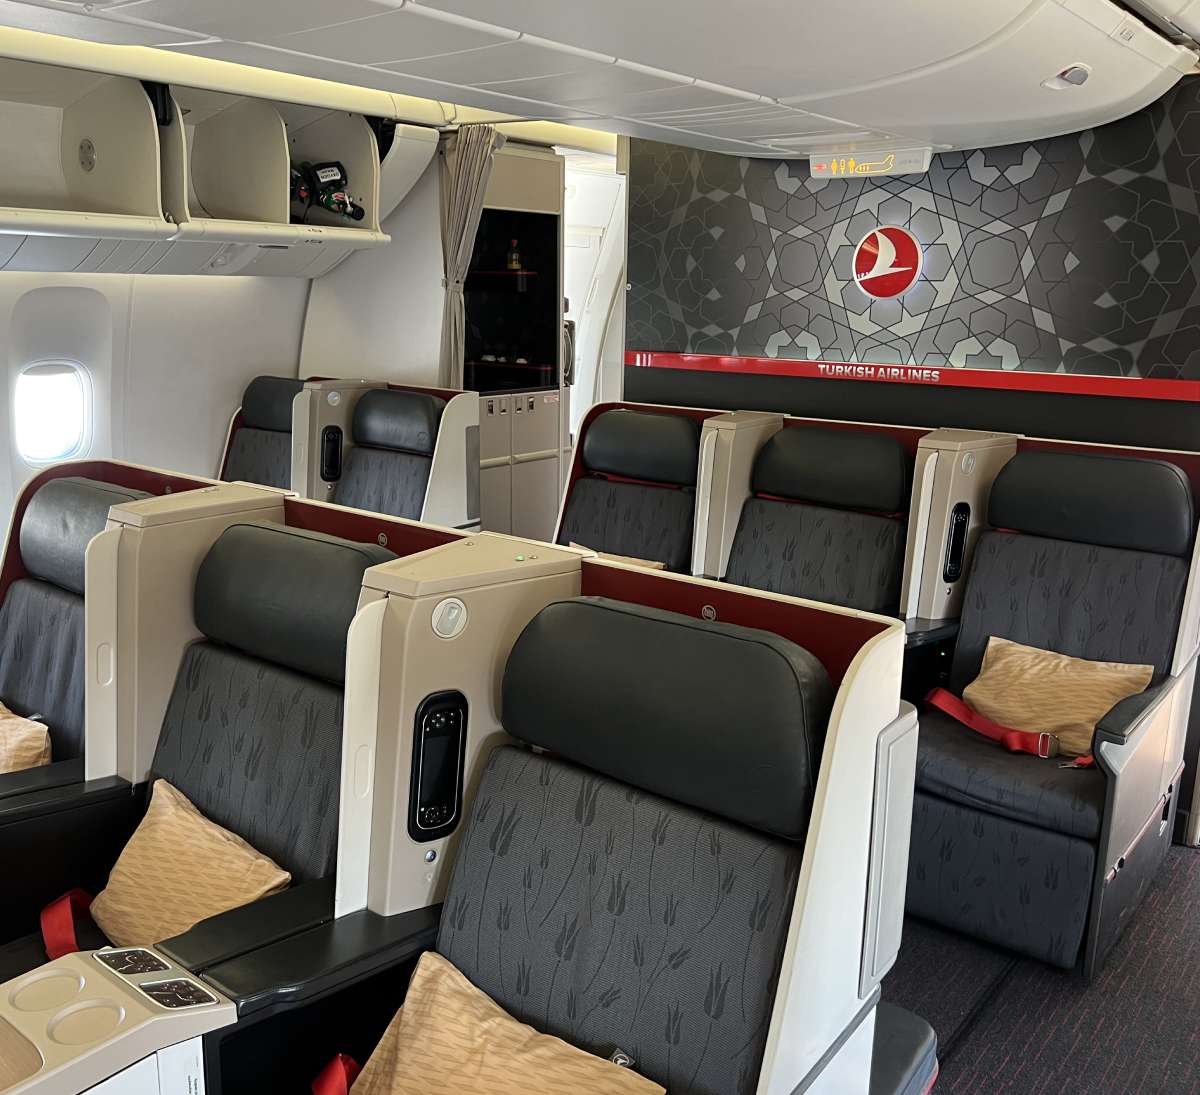 Turkish 777 Business Class